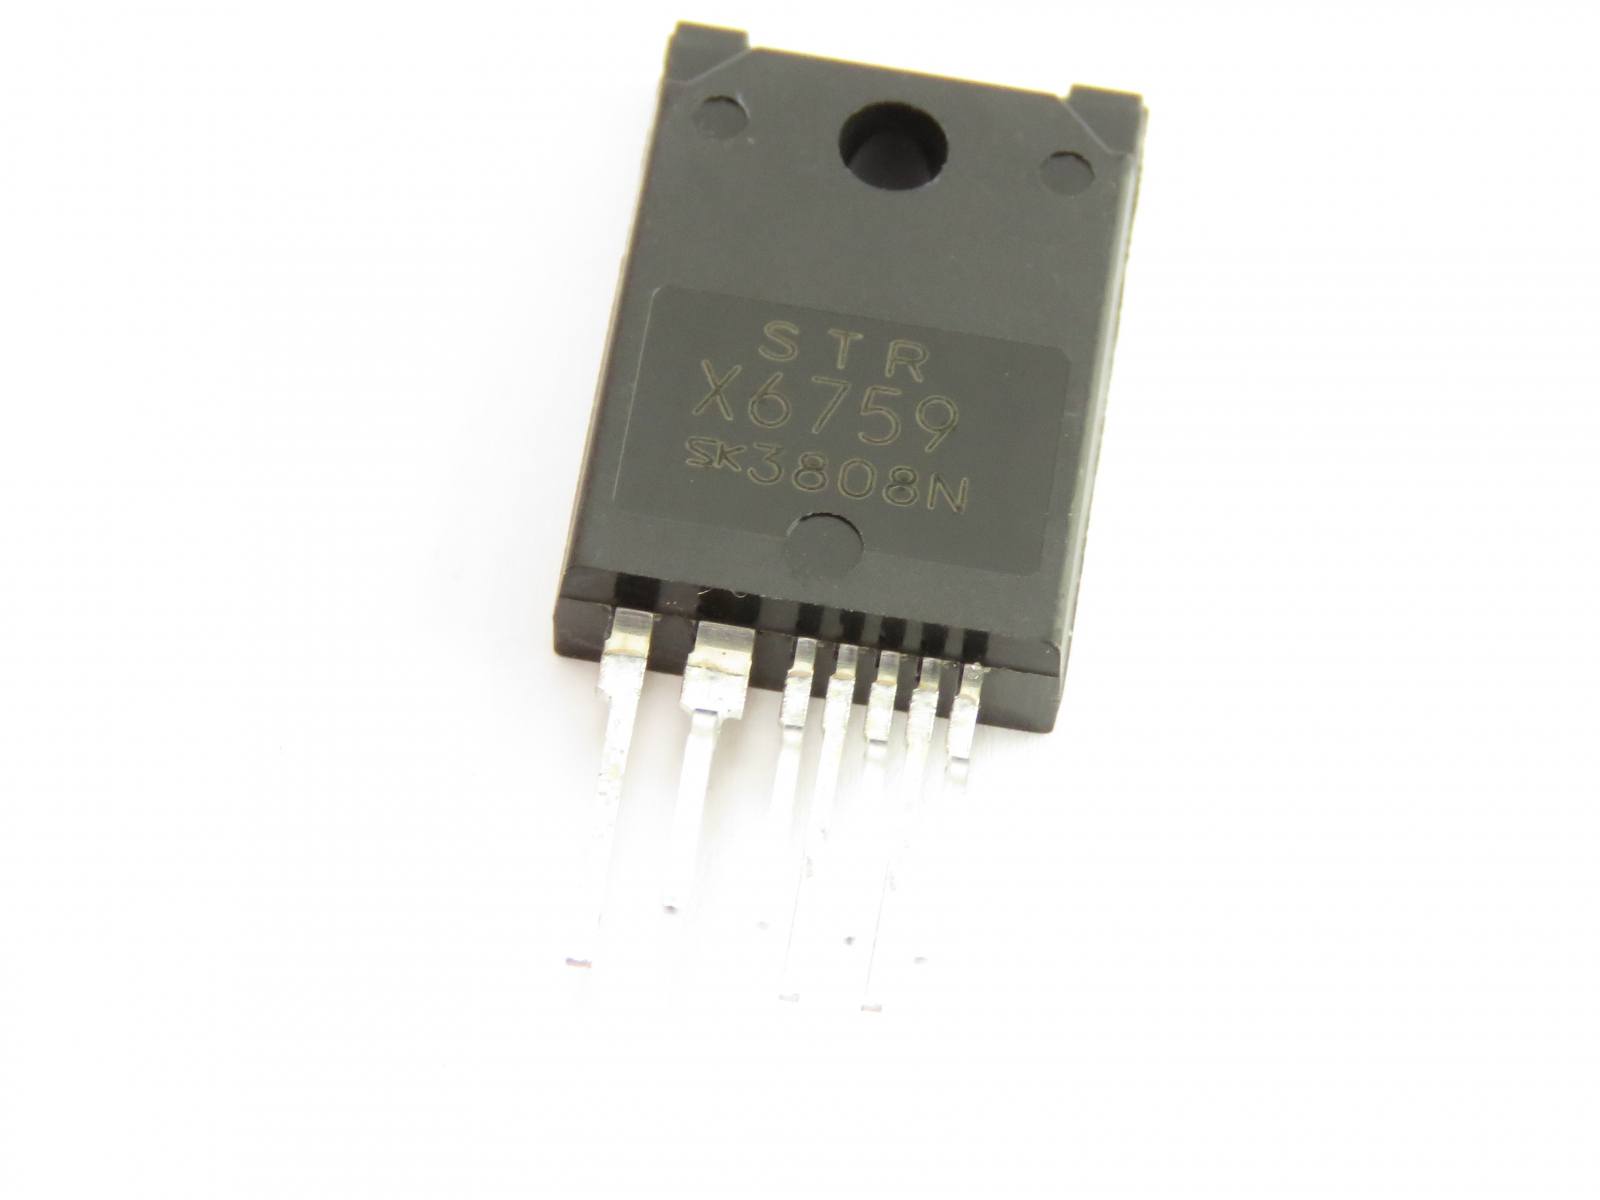 Circuit intégré STRX6759